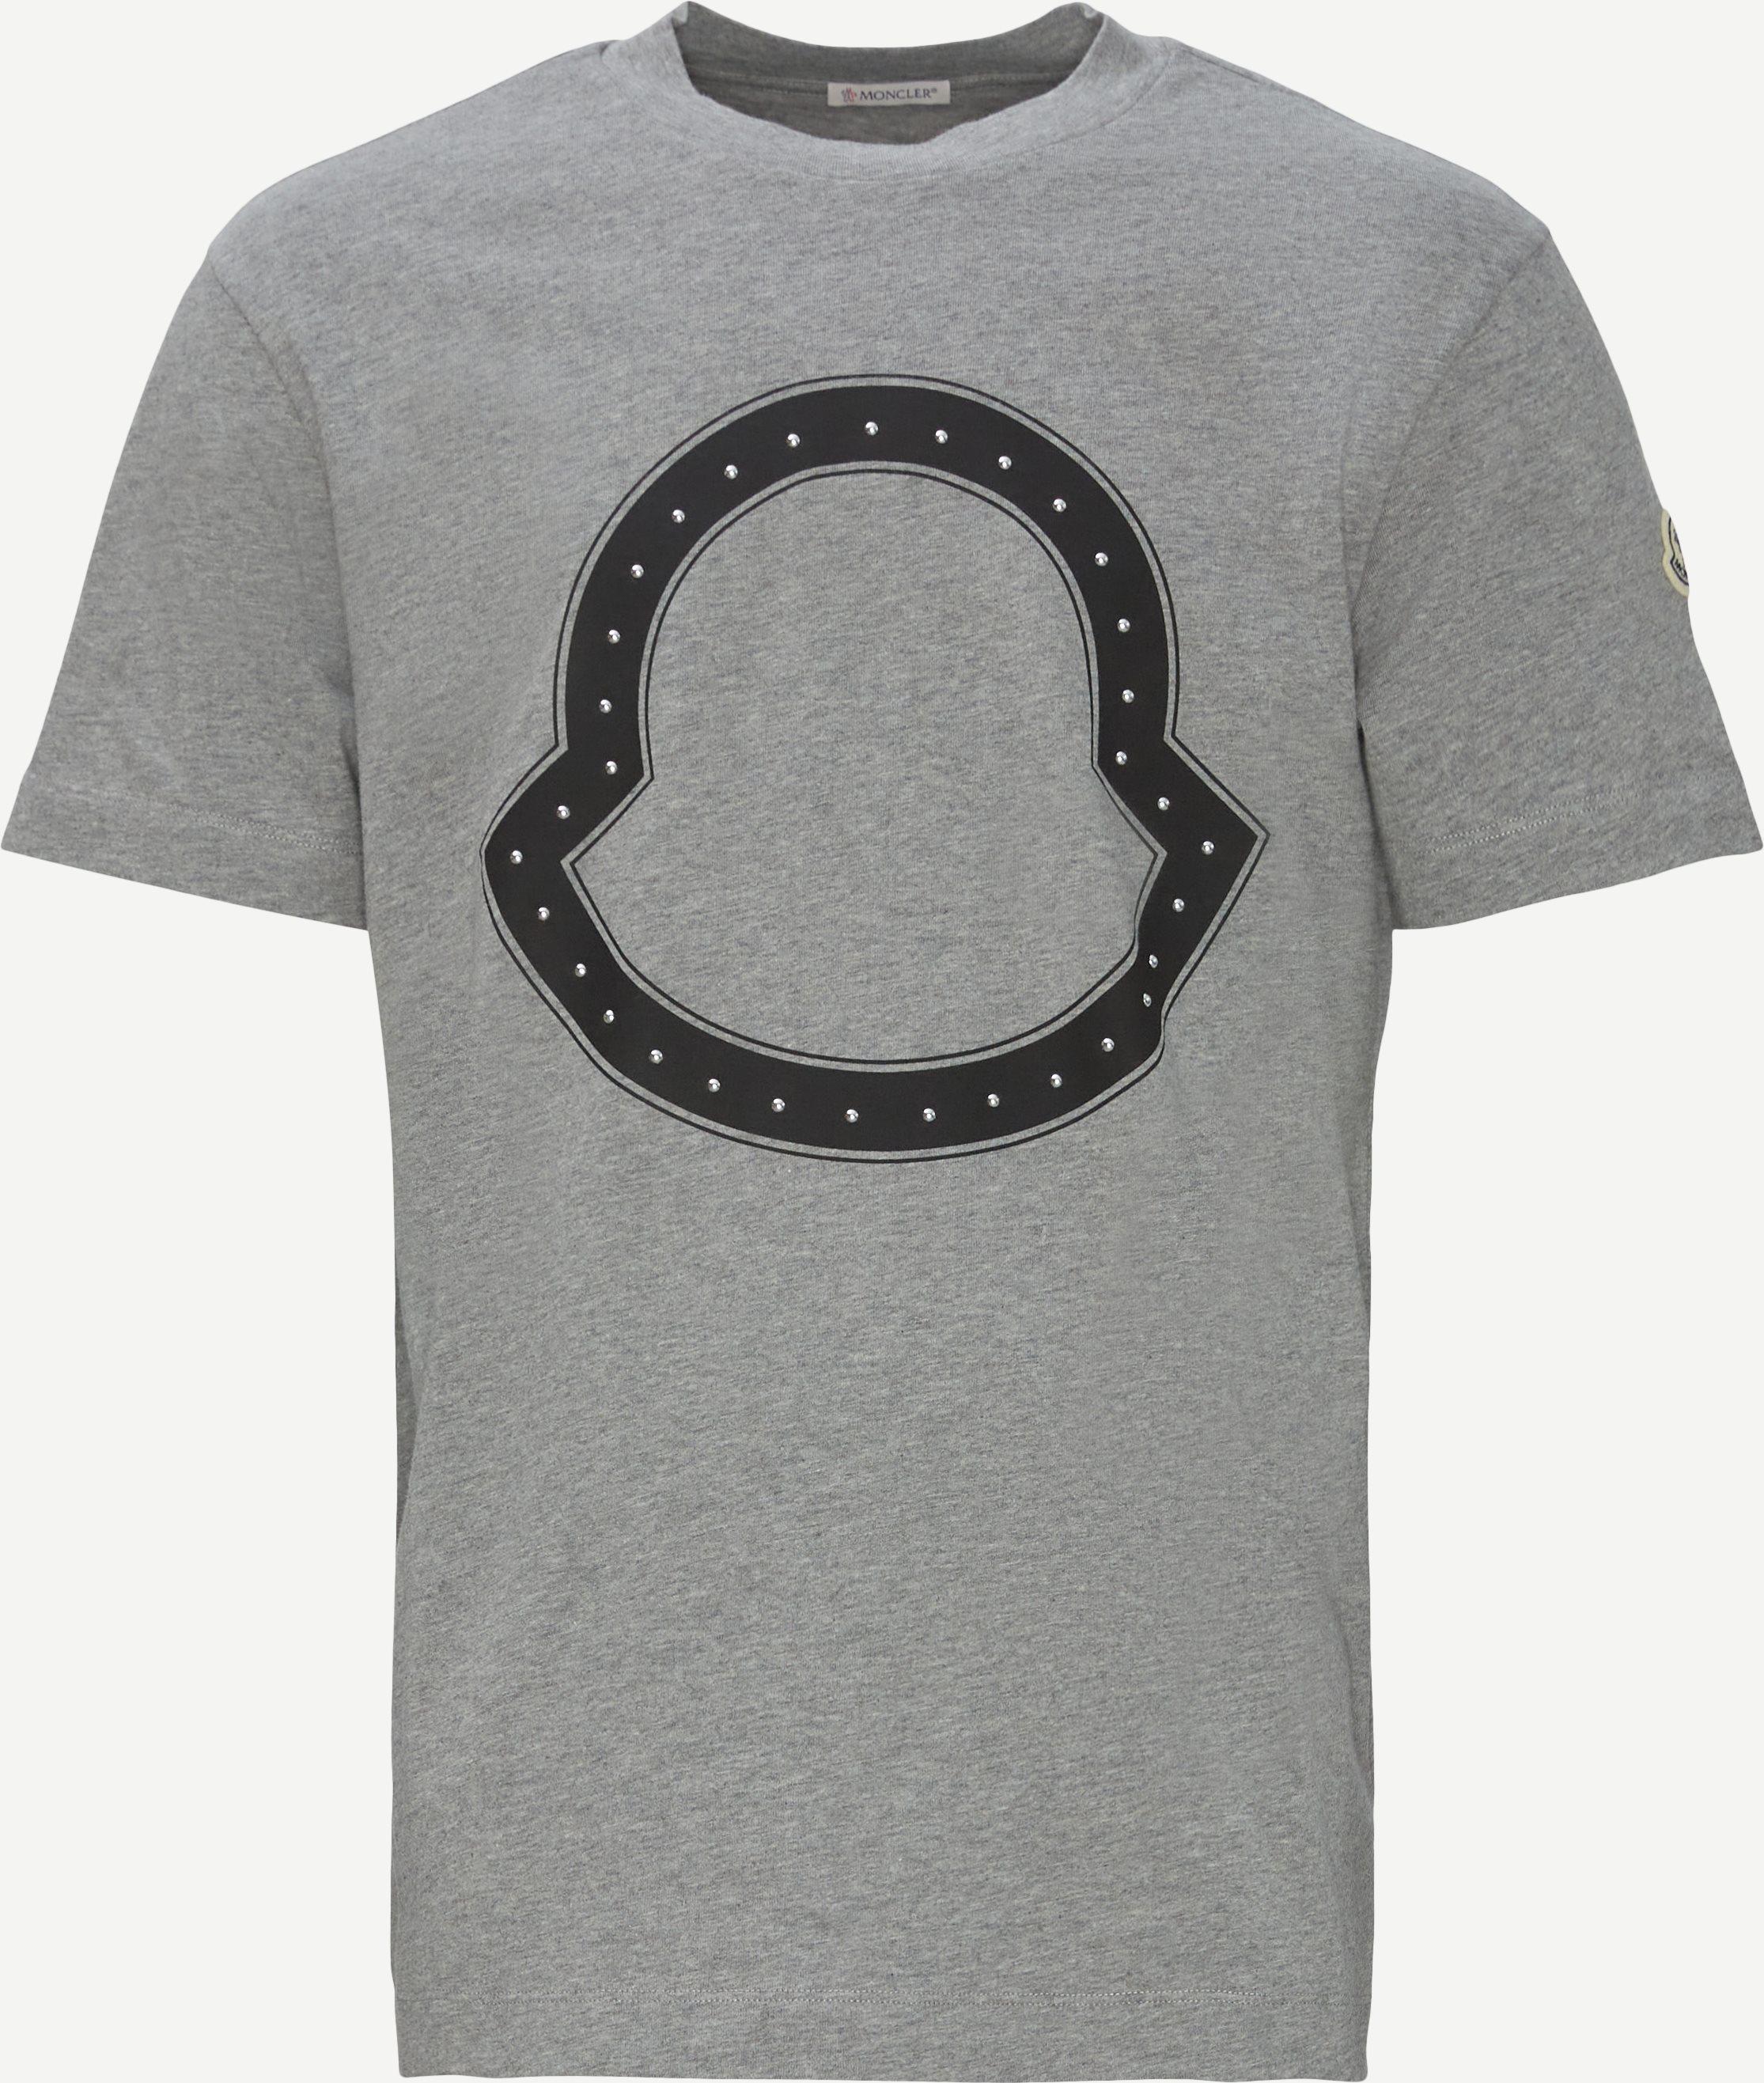 T-shirts - Loose fit - Grey